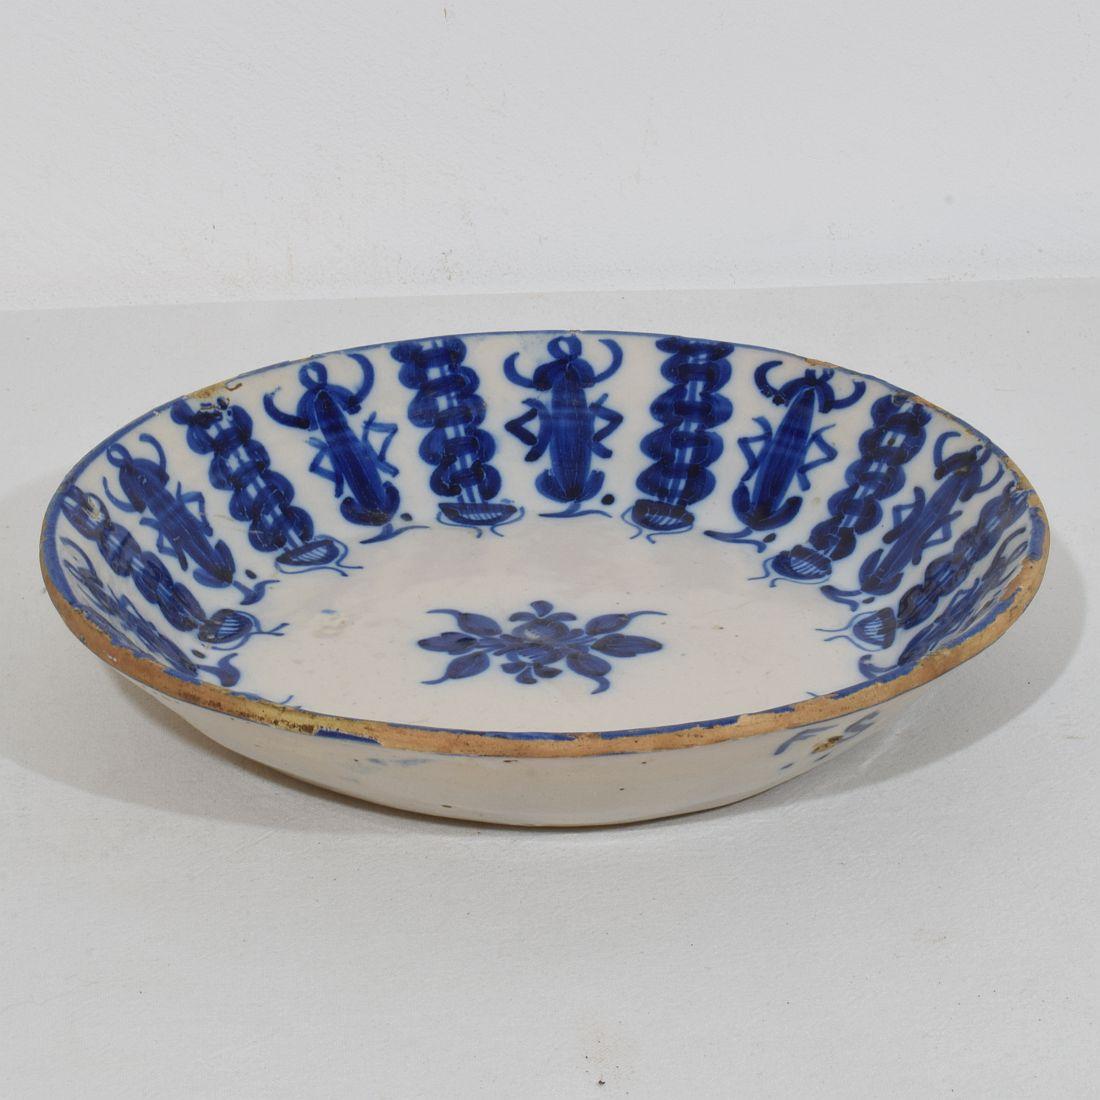 Rustic 19th Century Spanish Glazed Terracotta Bowl